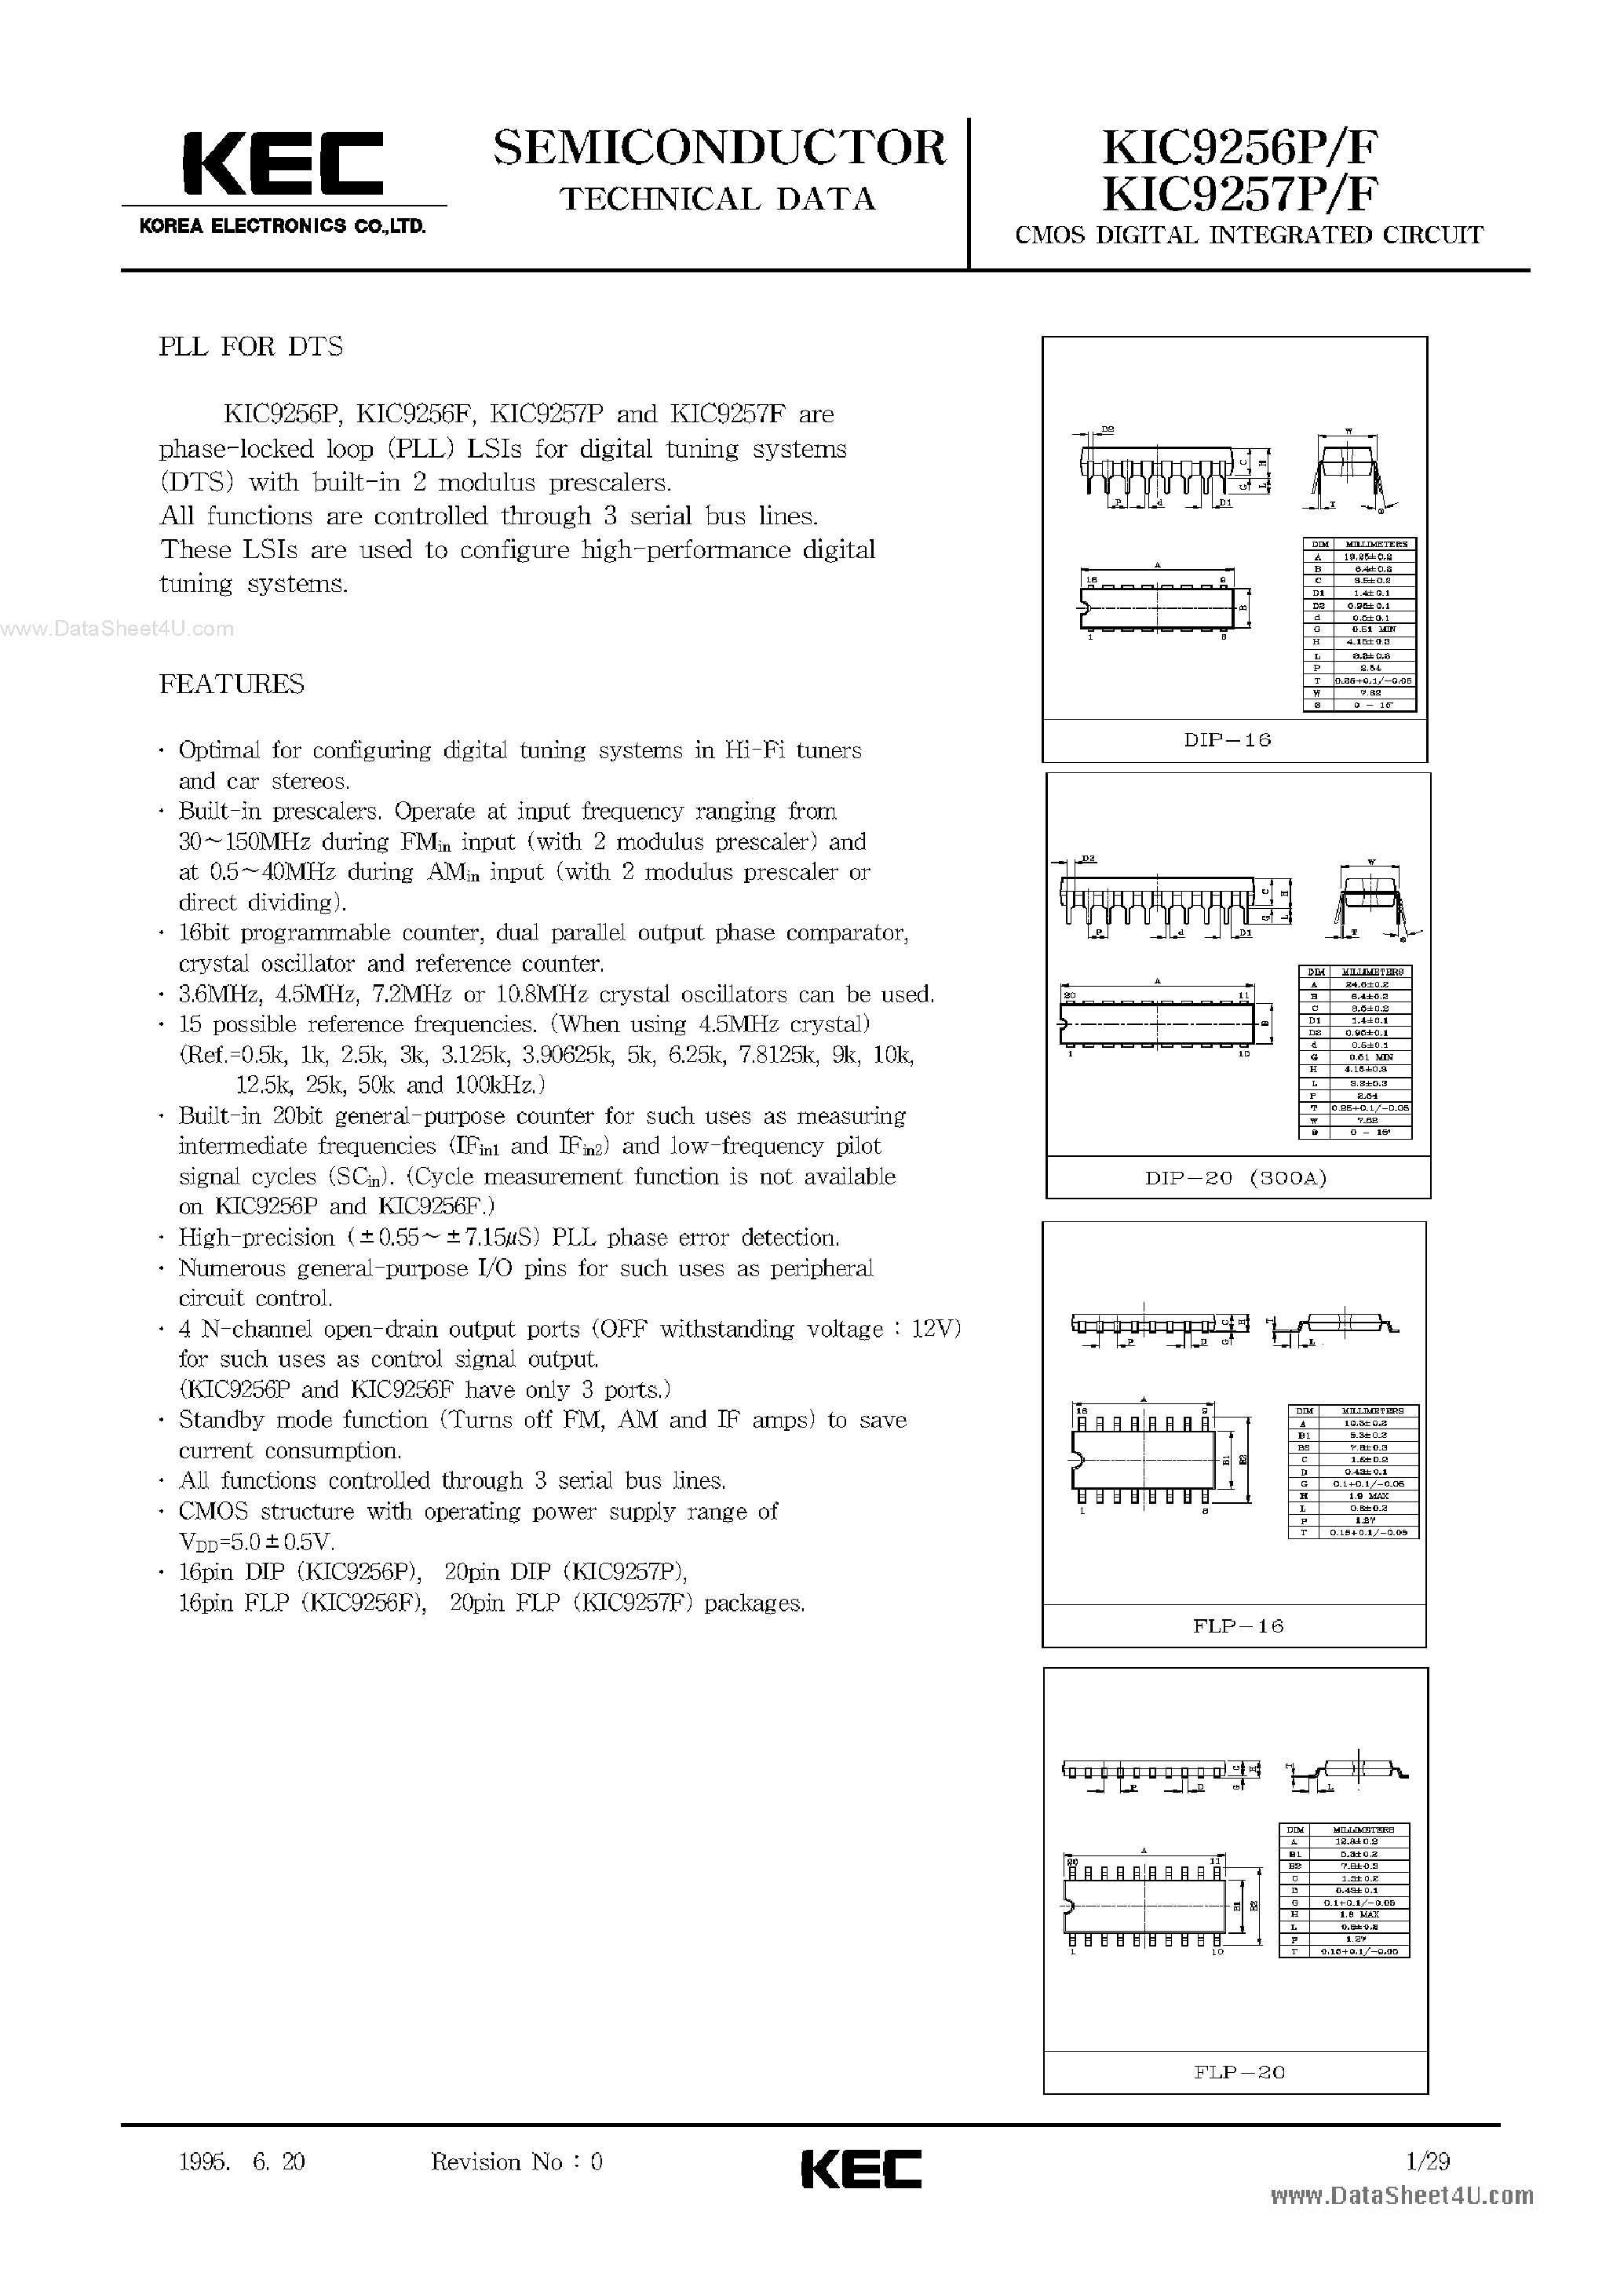 Datasheet KIC9256P/F - SEMICONDUCTOR TECHNICAL DATA page 1